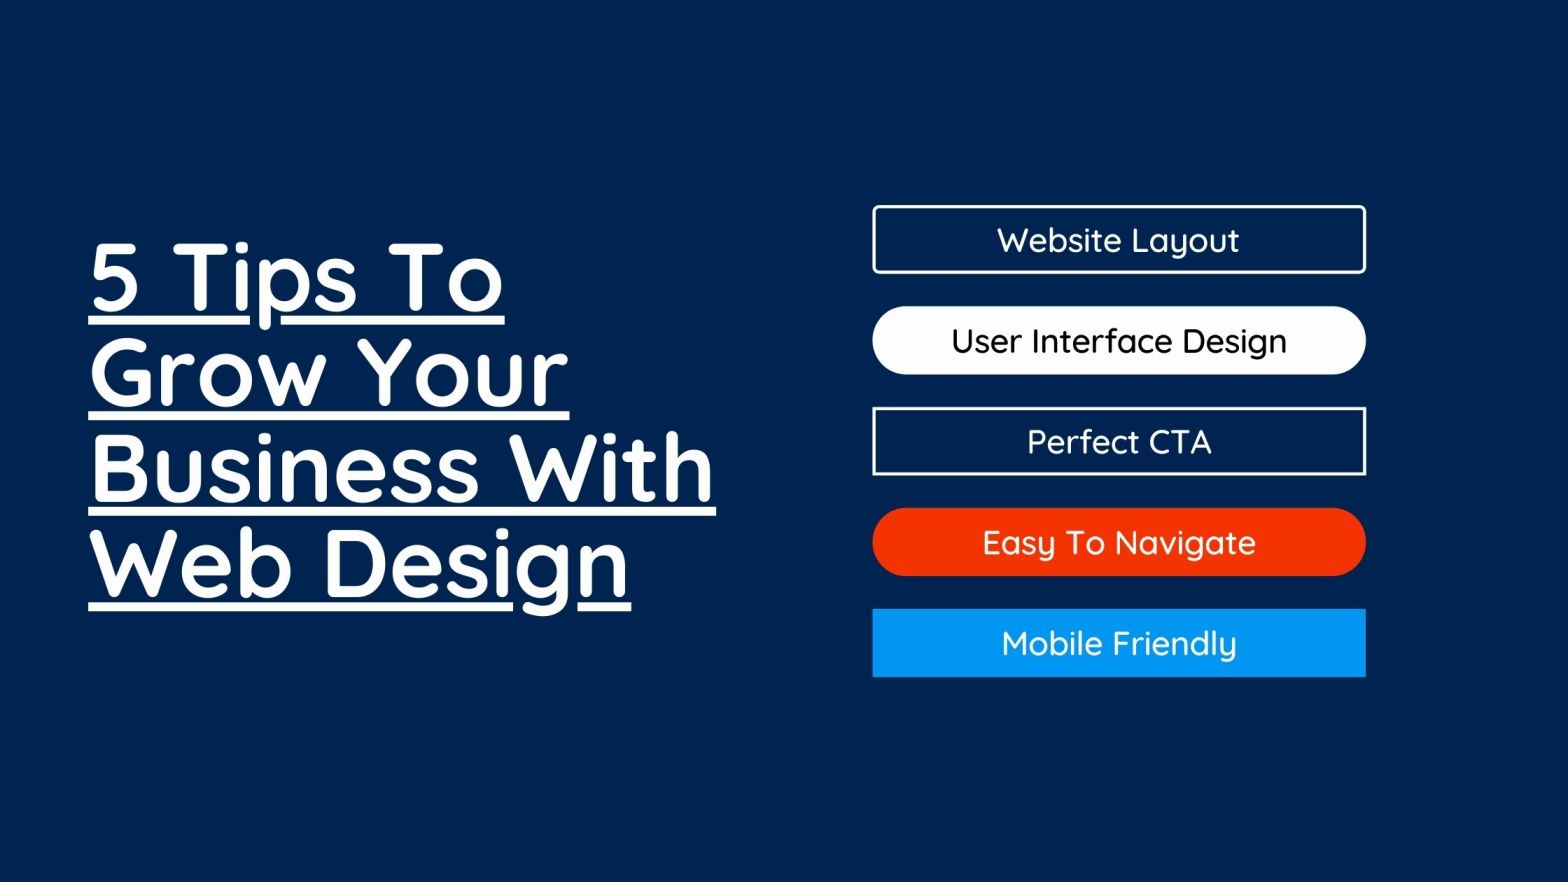 Web Design benefits